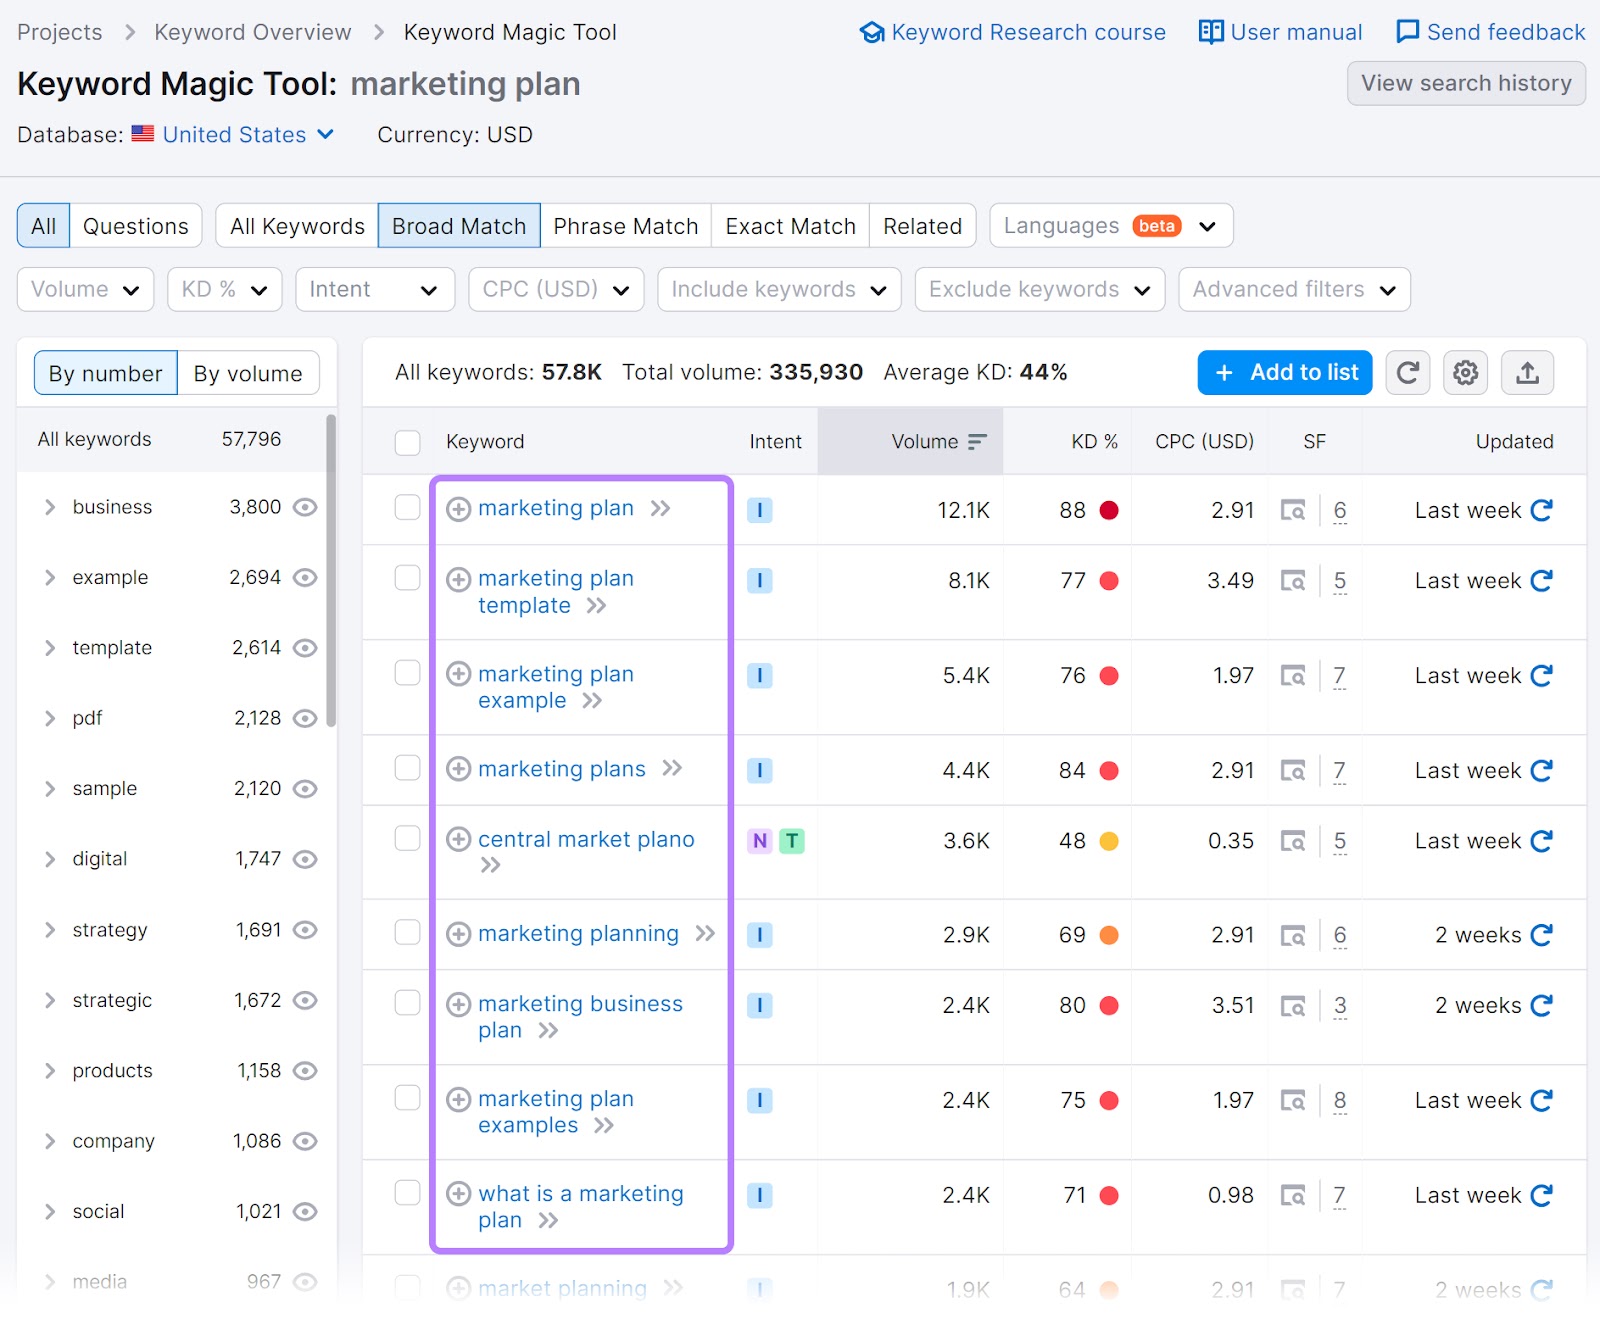 Keyword Magic Tool results for "marketing plan"